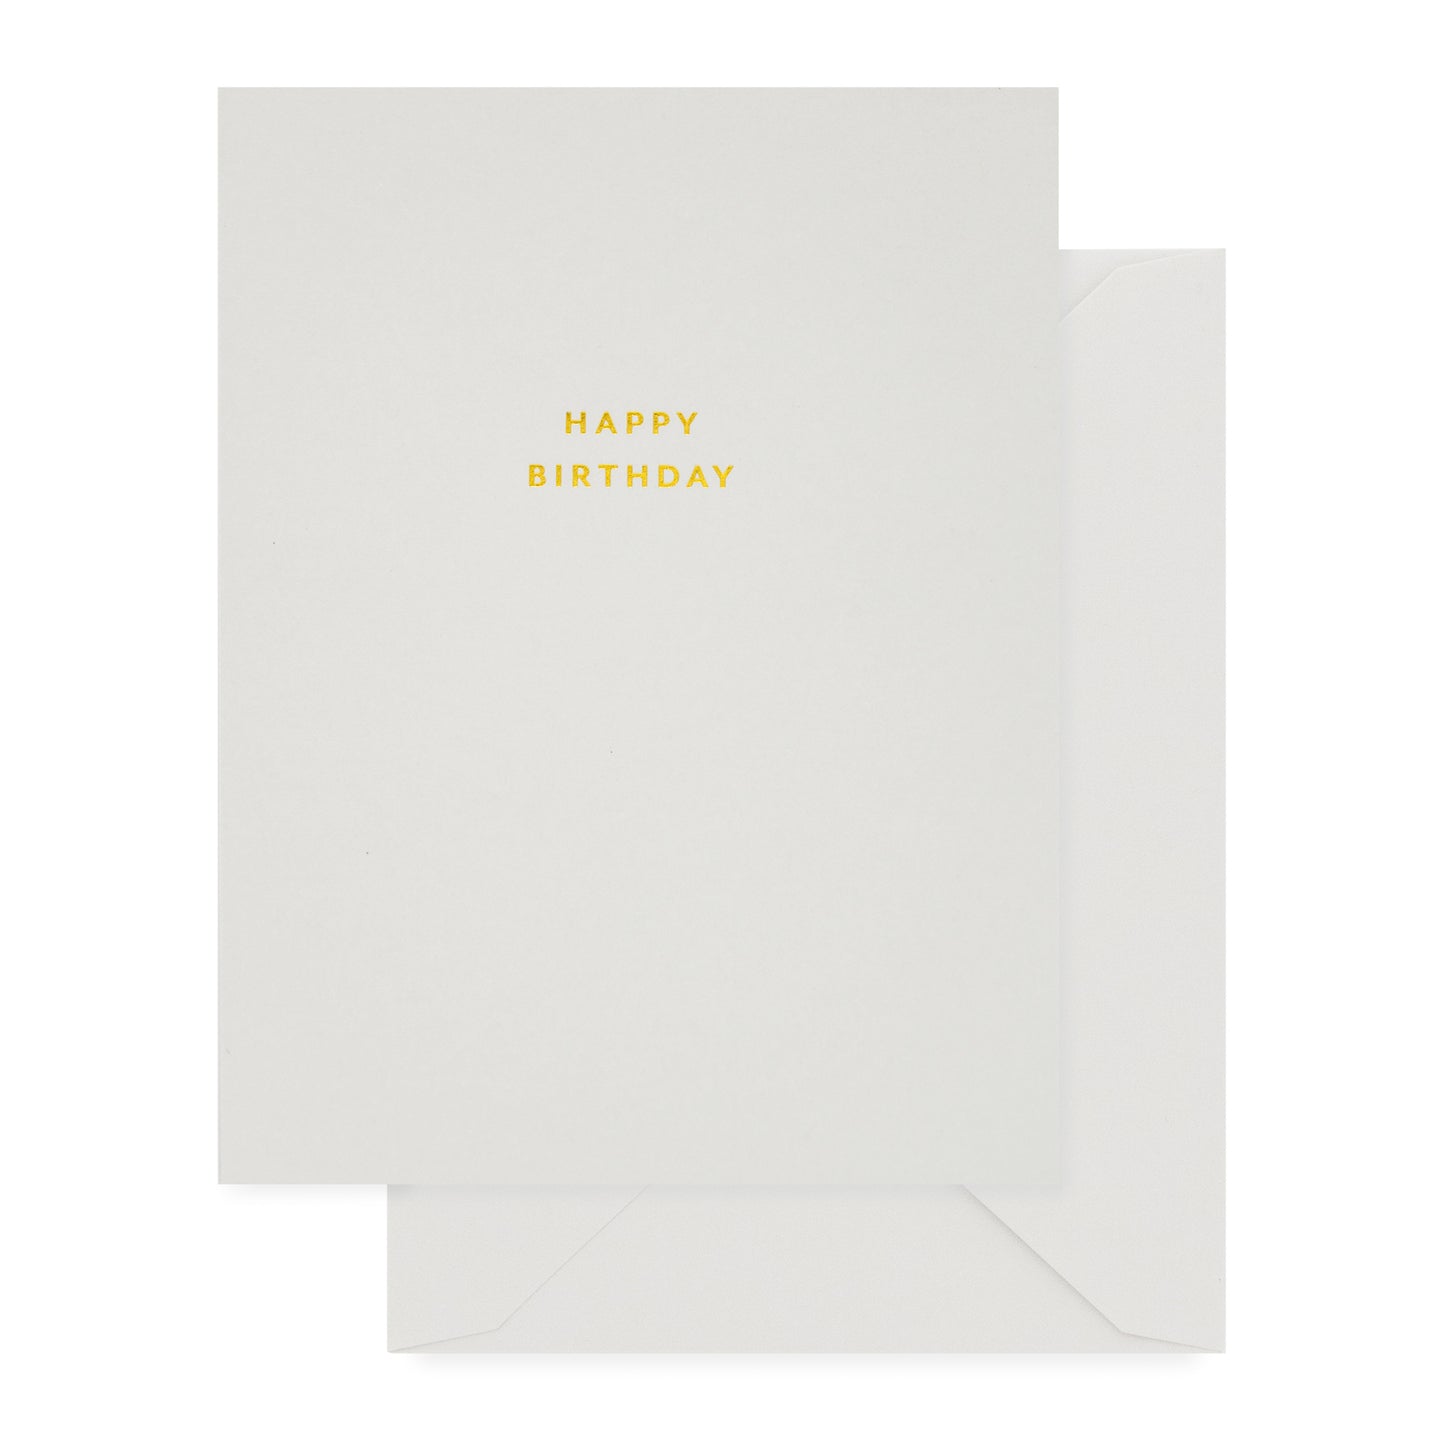 Grey happy birthday card